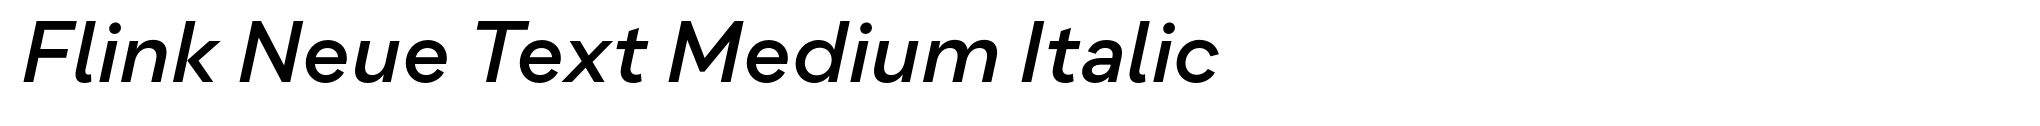 Flink Neue Text Medium Italic image